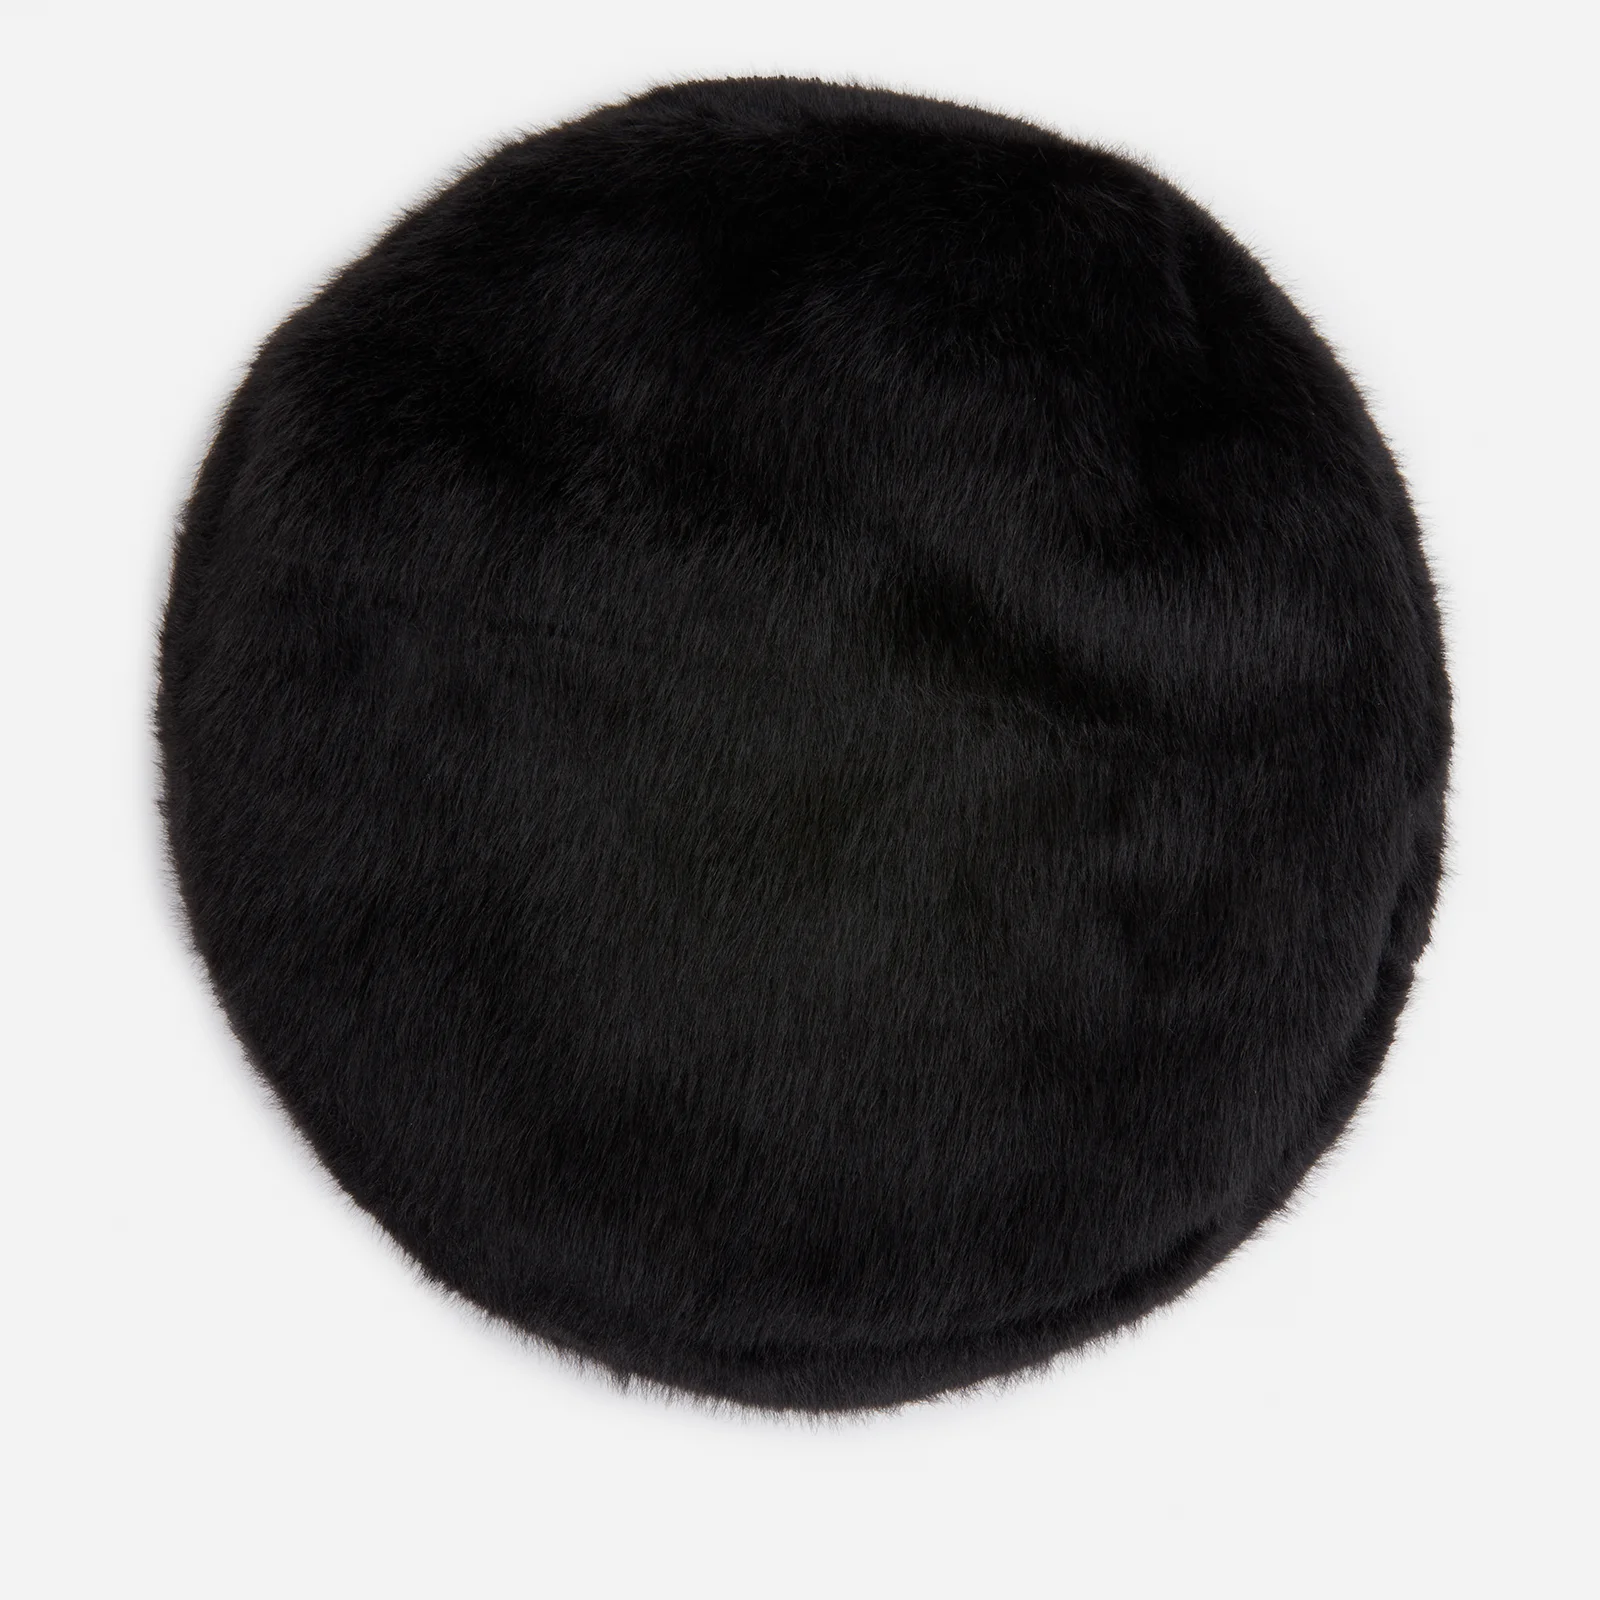 Stand Studio Women's Freja Faux Fur Beret - Black Image 1